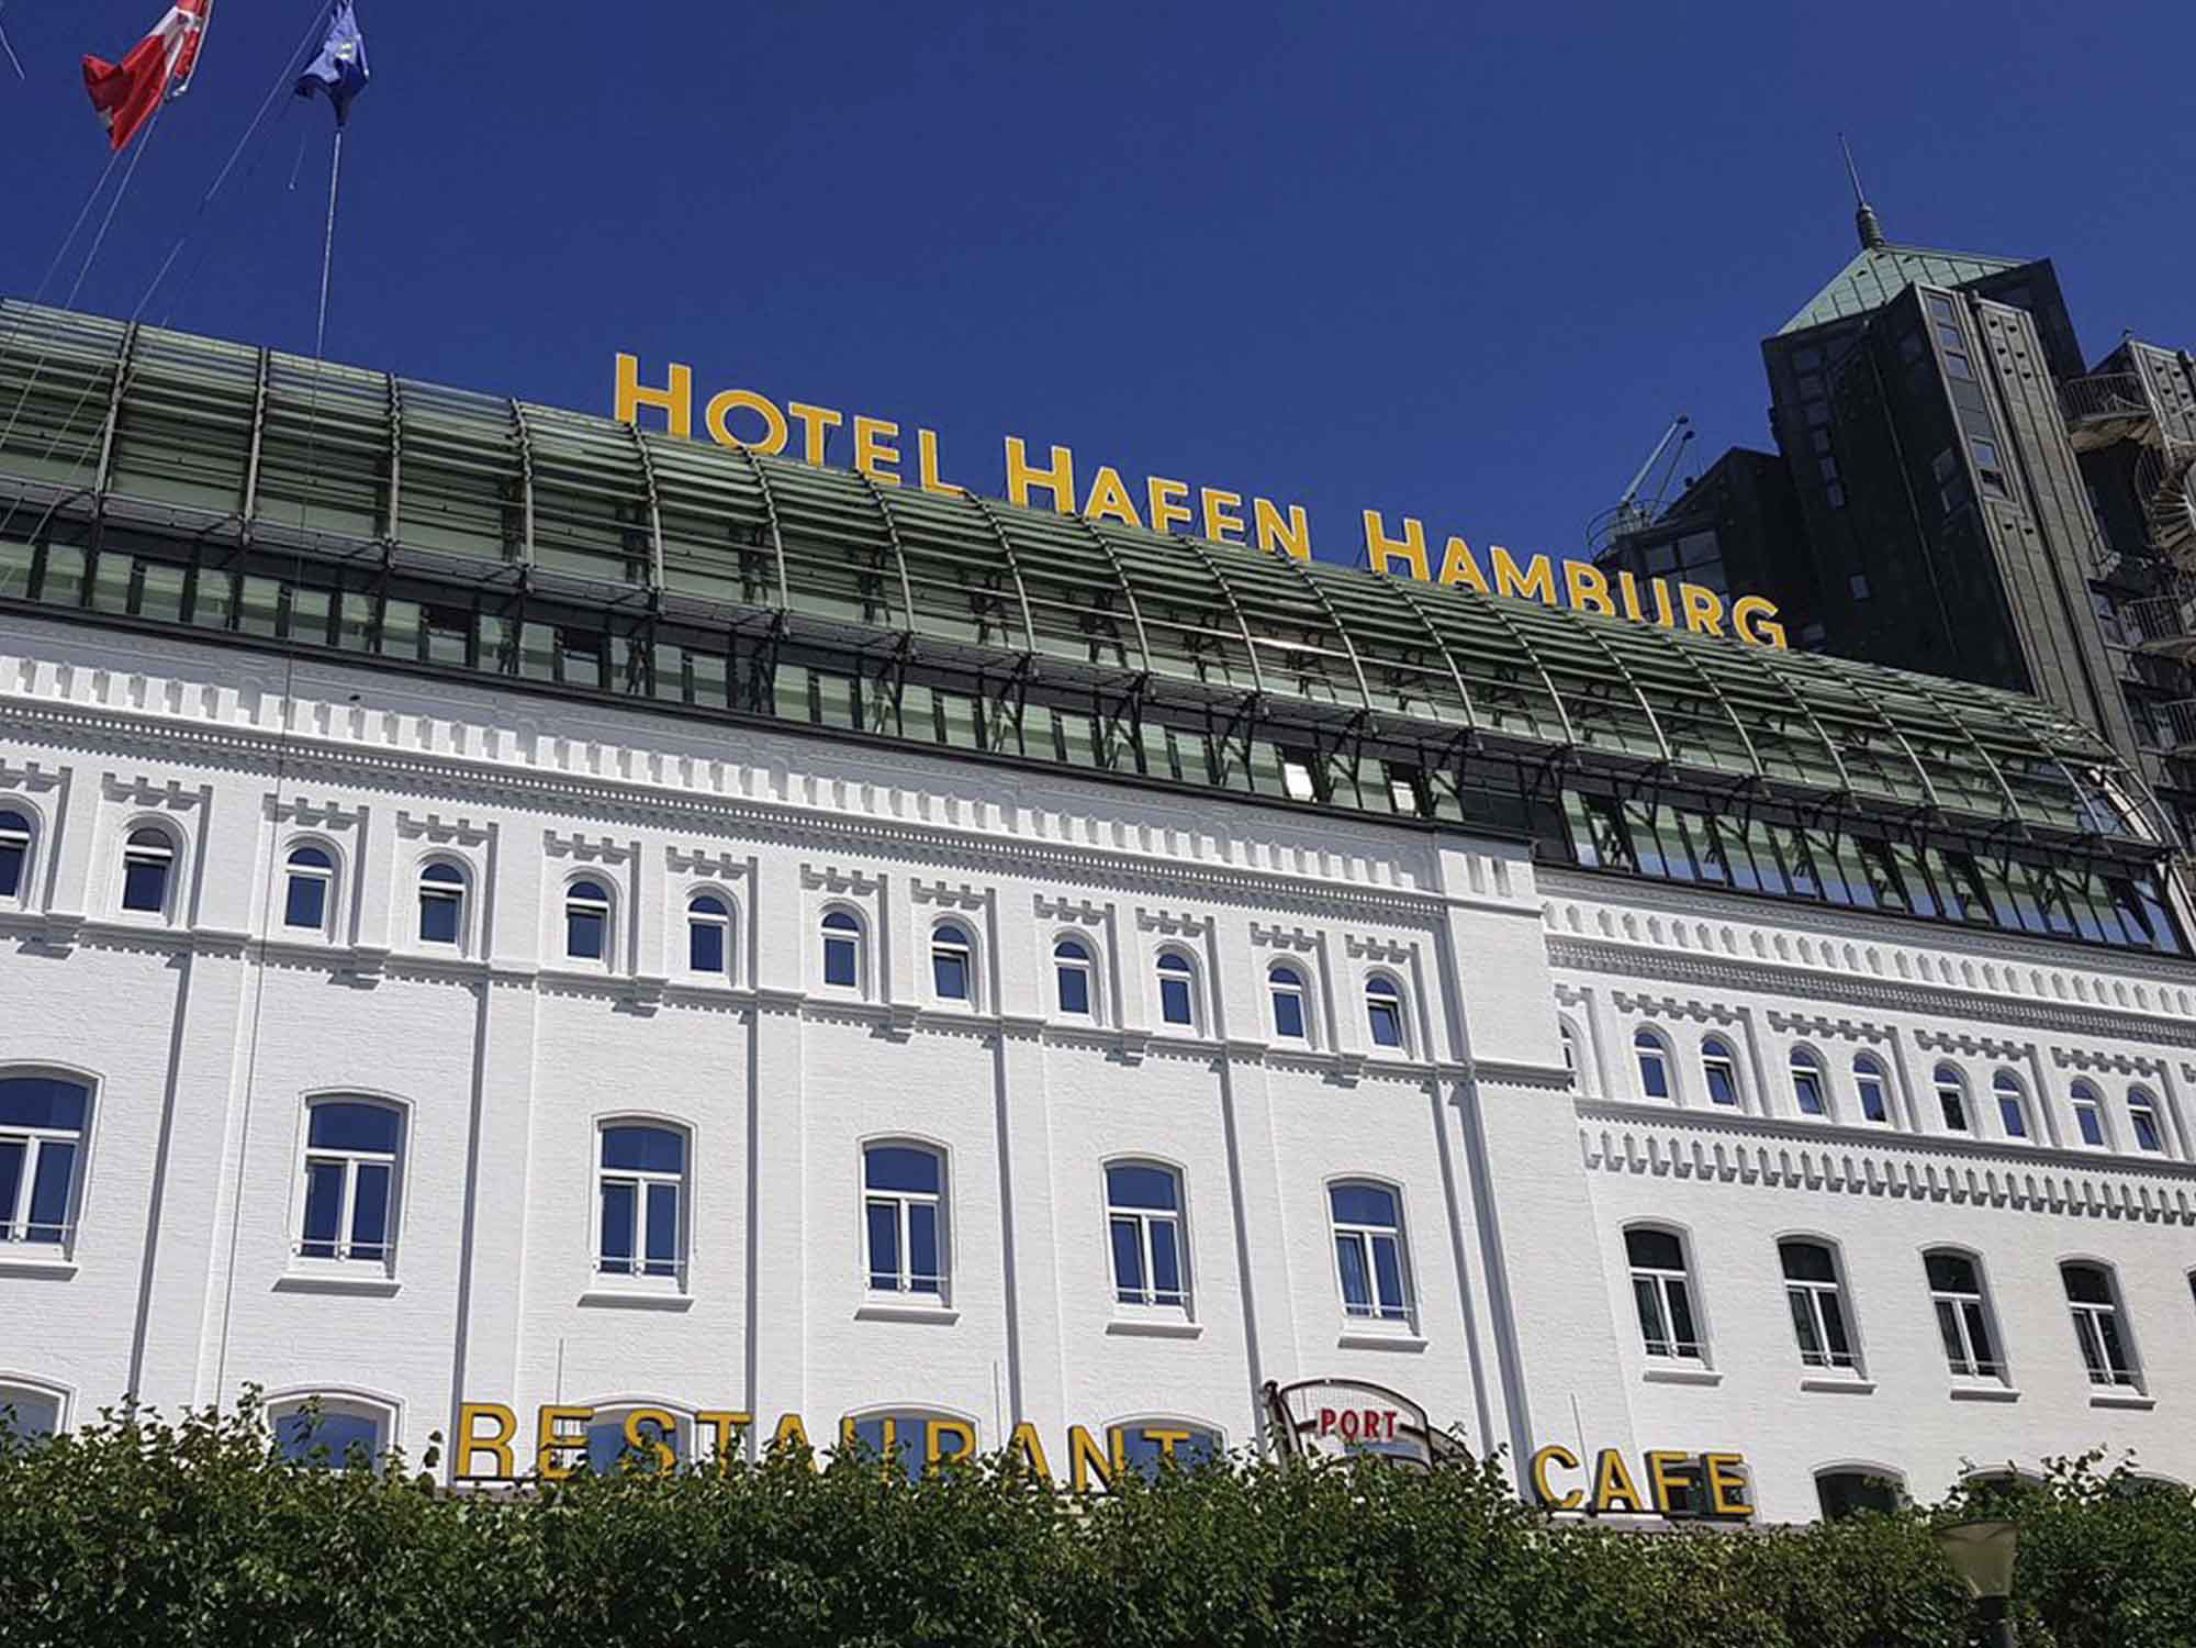 Hotels in Hamburg - Hotel Hafen Hamburg